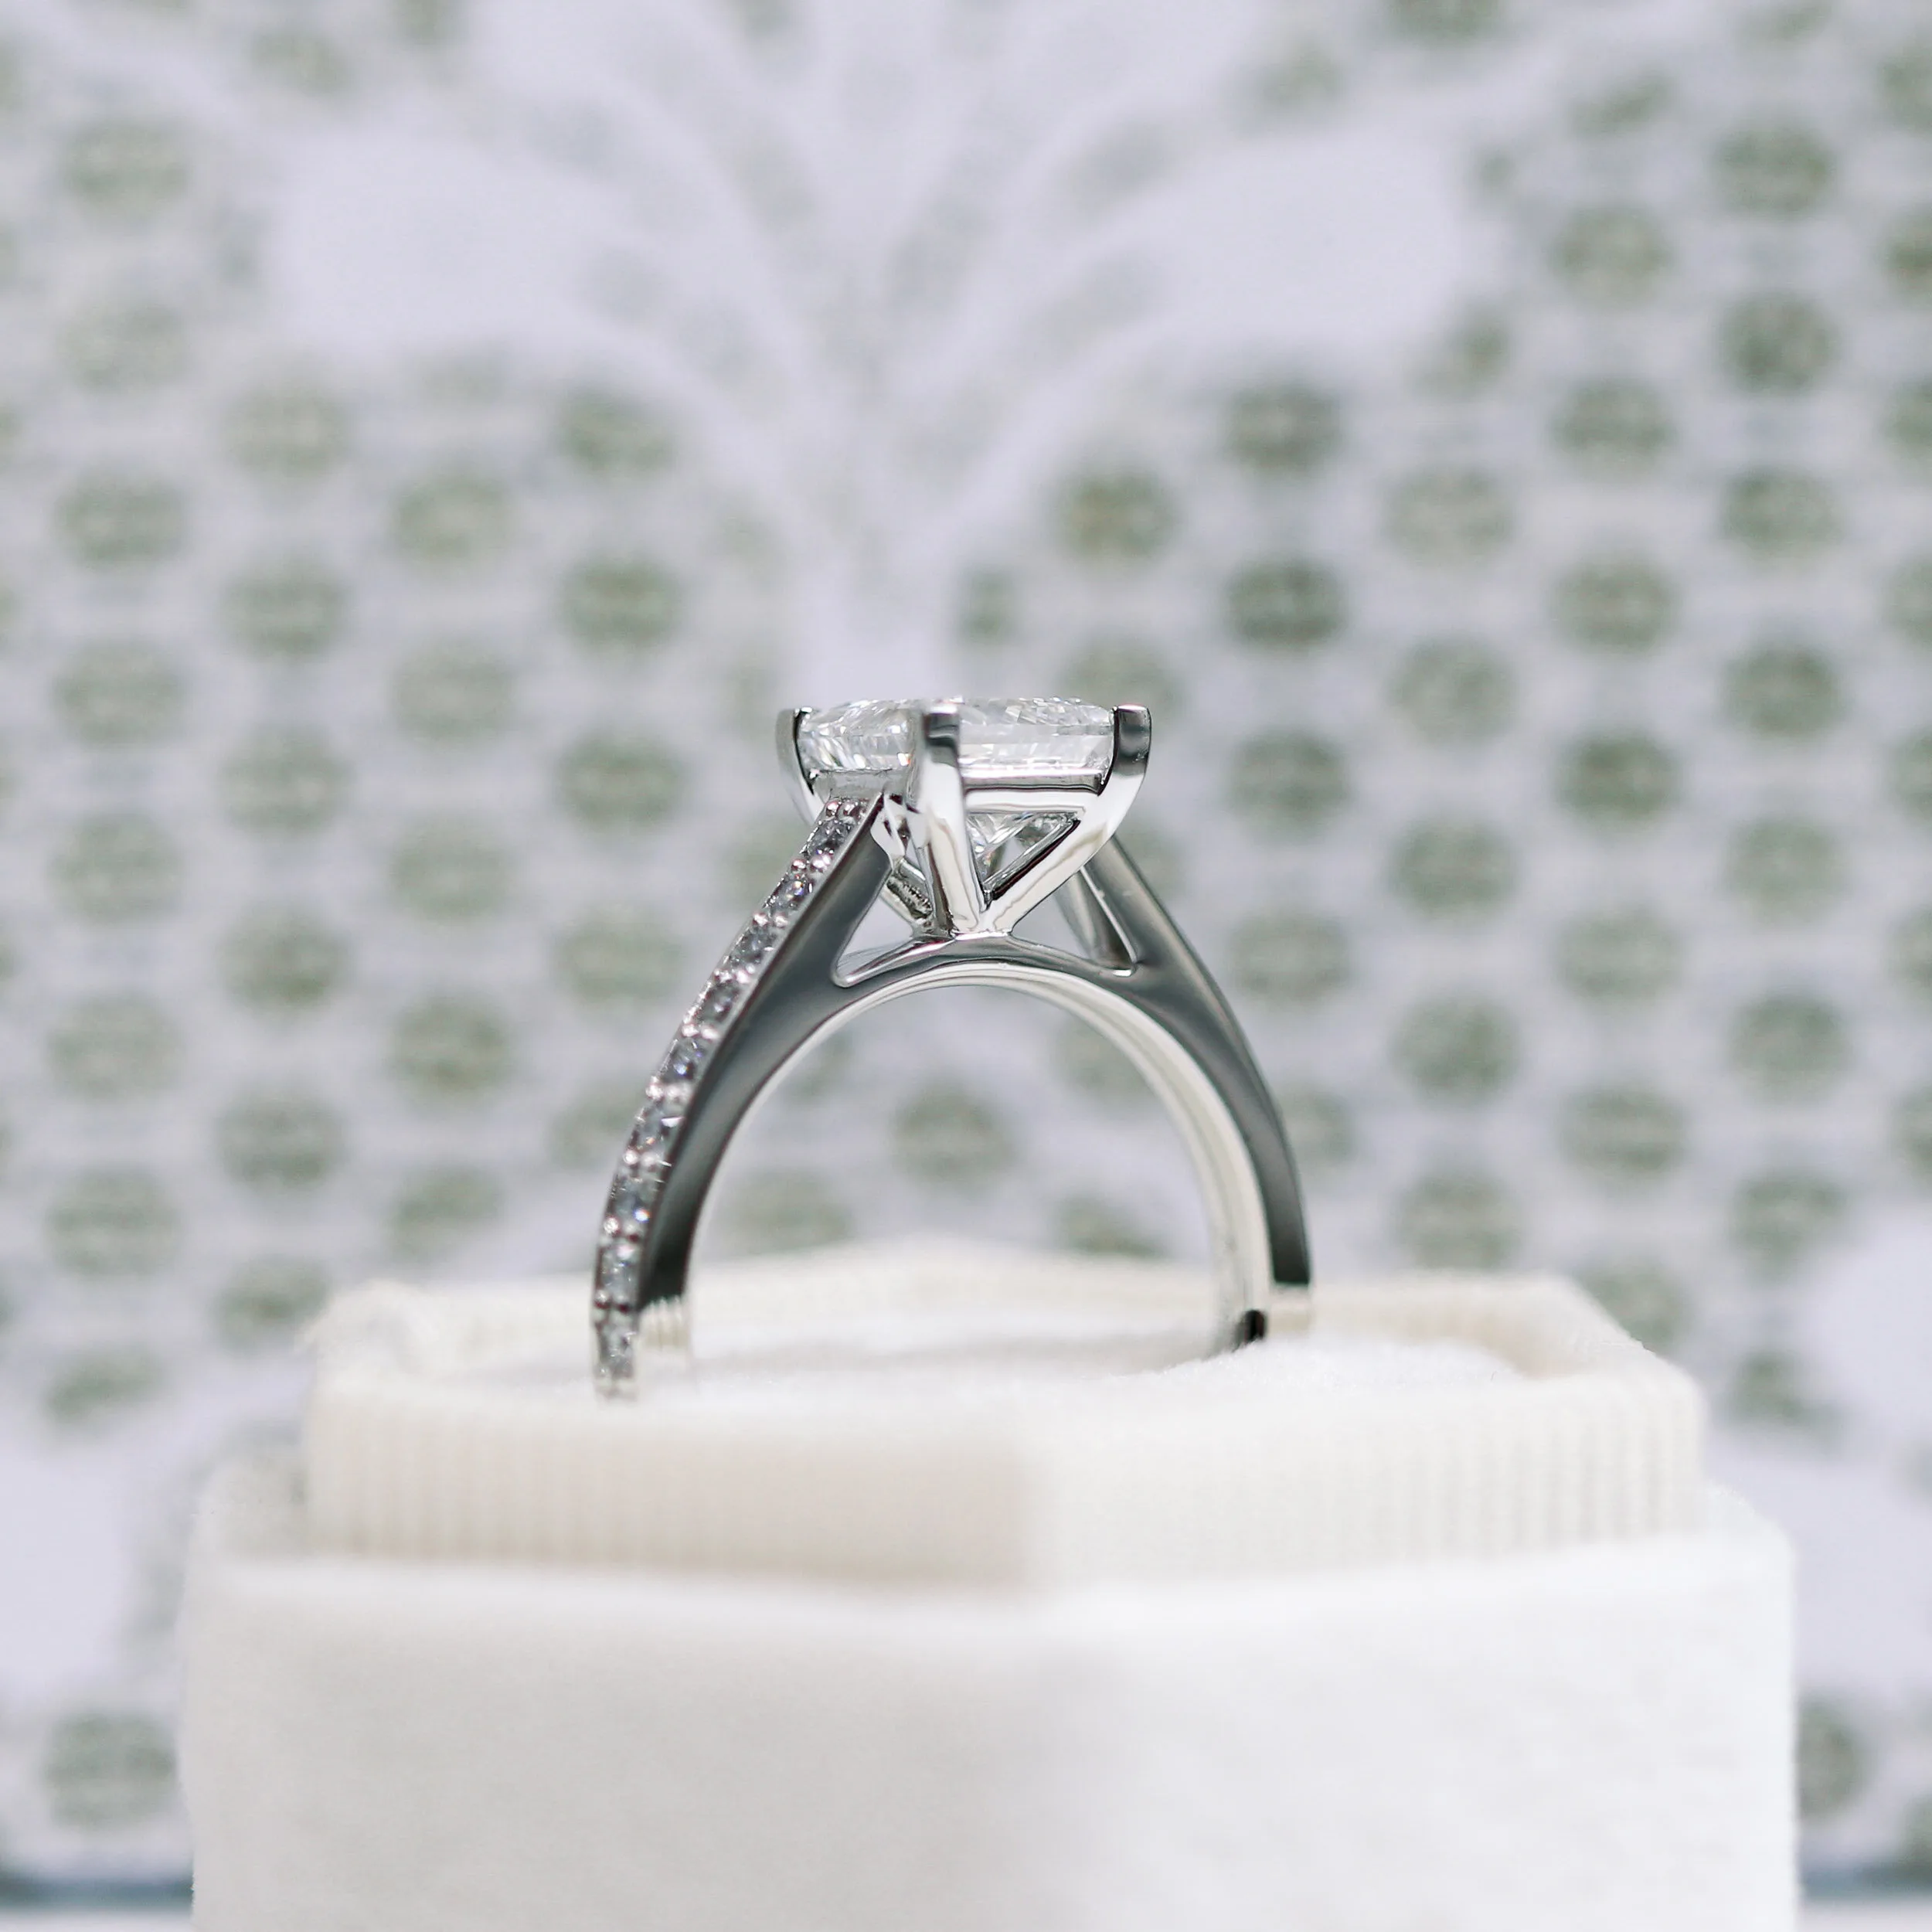 Platinum 1.75ct Princess Cut Engagement Ring with Channel Set Pavé Band featuring Lab Created Diamonds Ada Diamonds Design AD-074 Profile